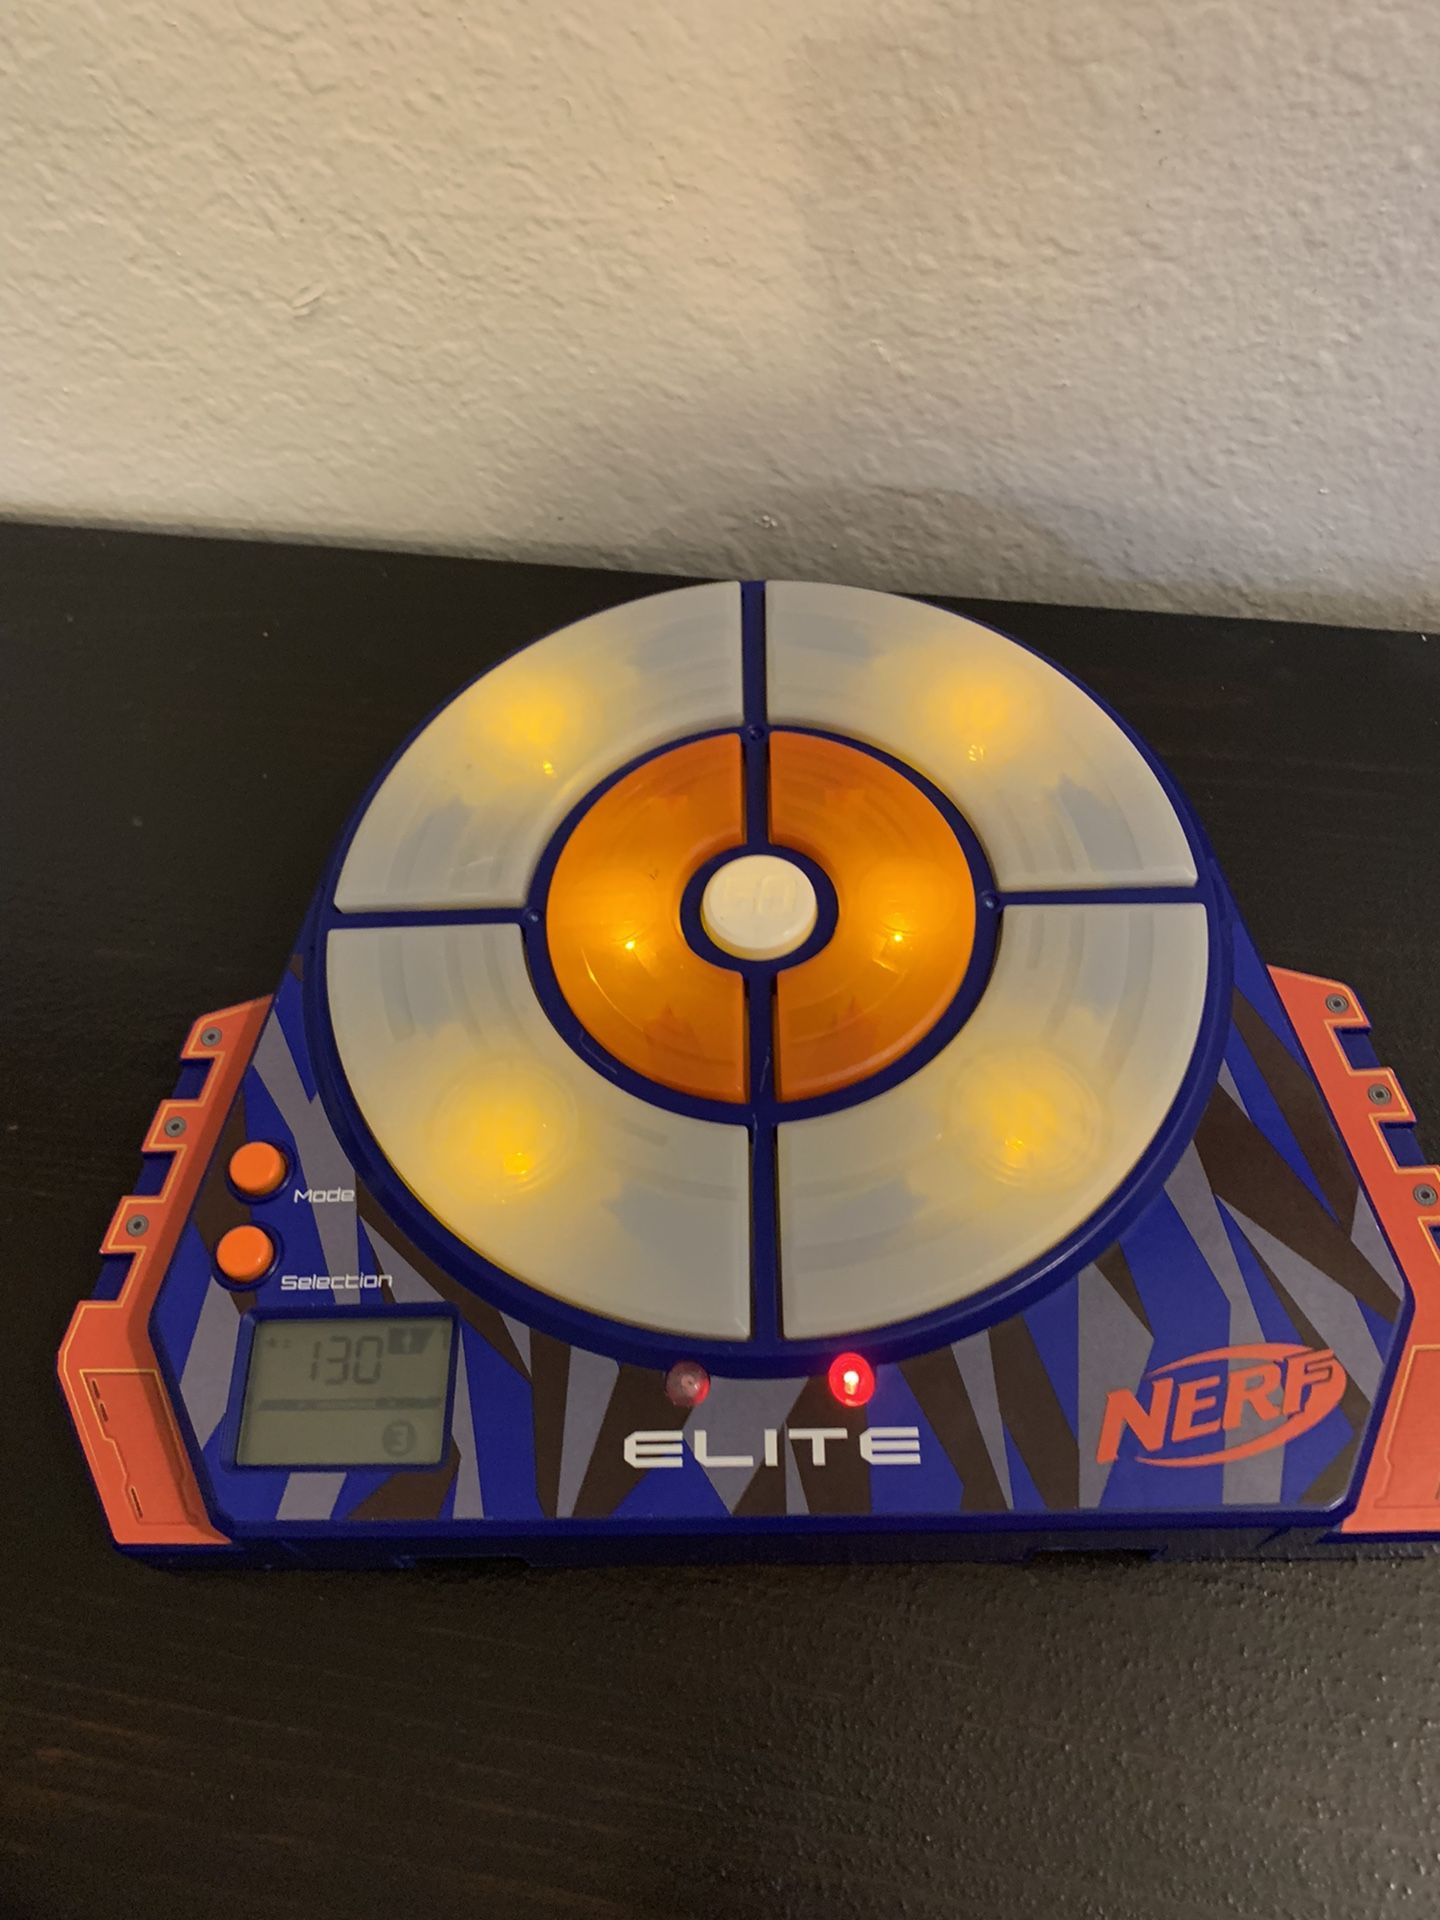 NERF Digital Light up Target and Predator Gun